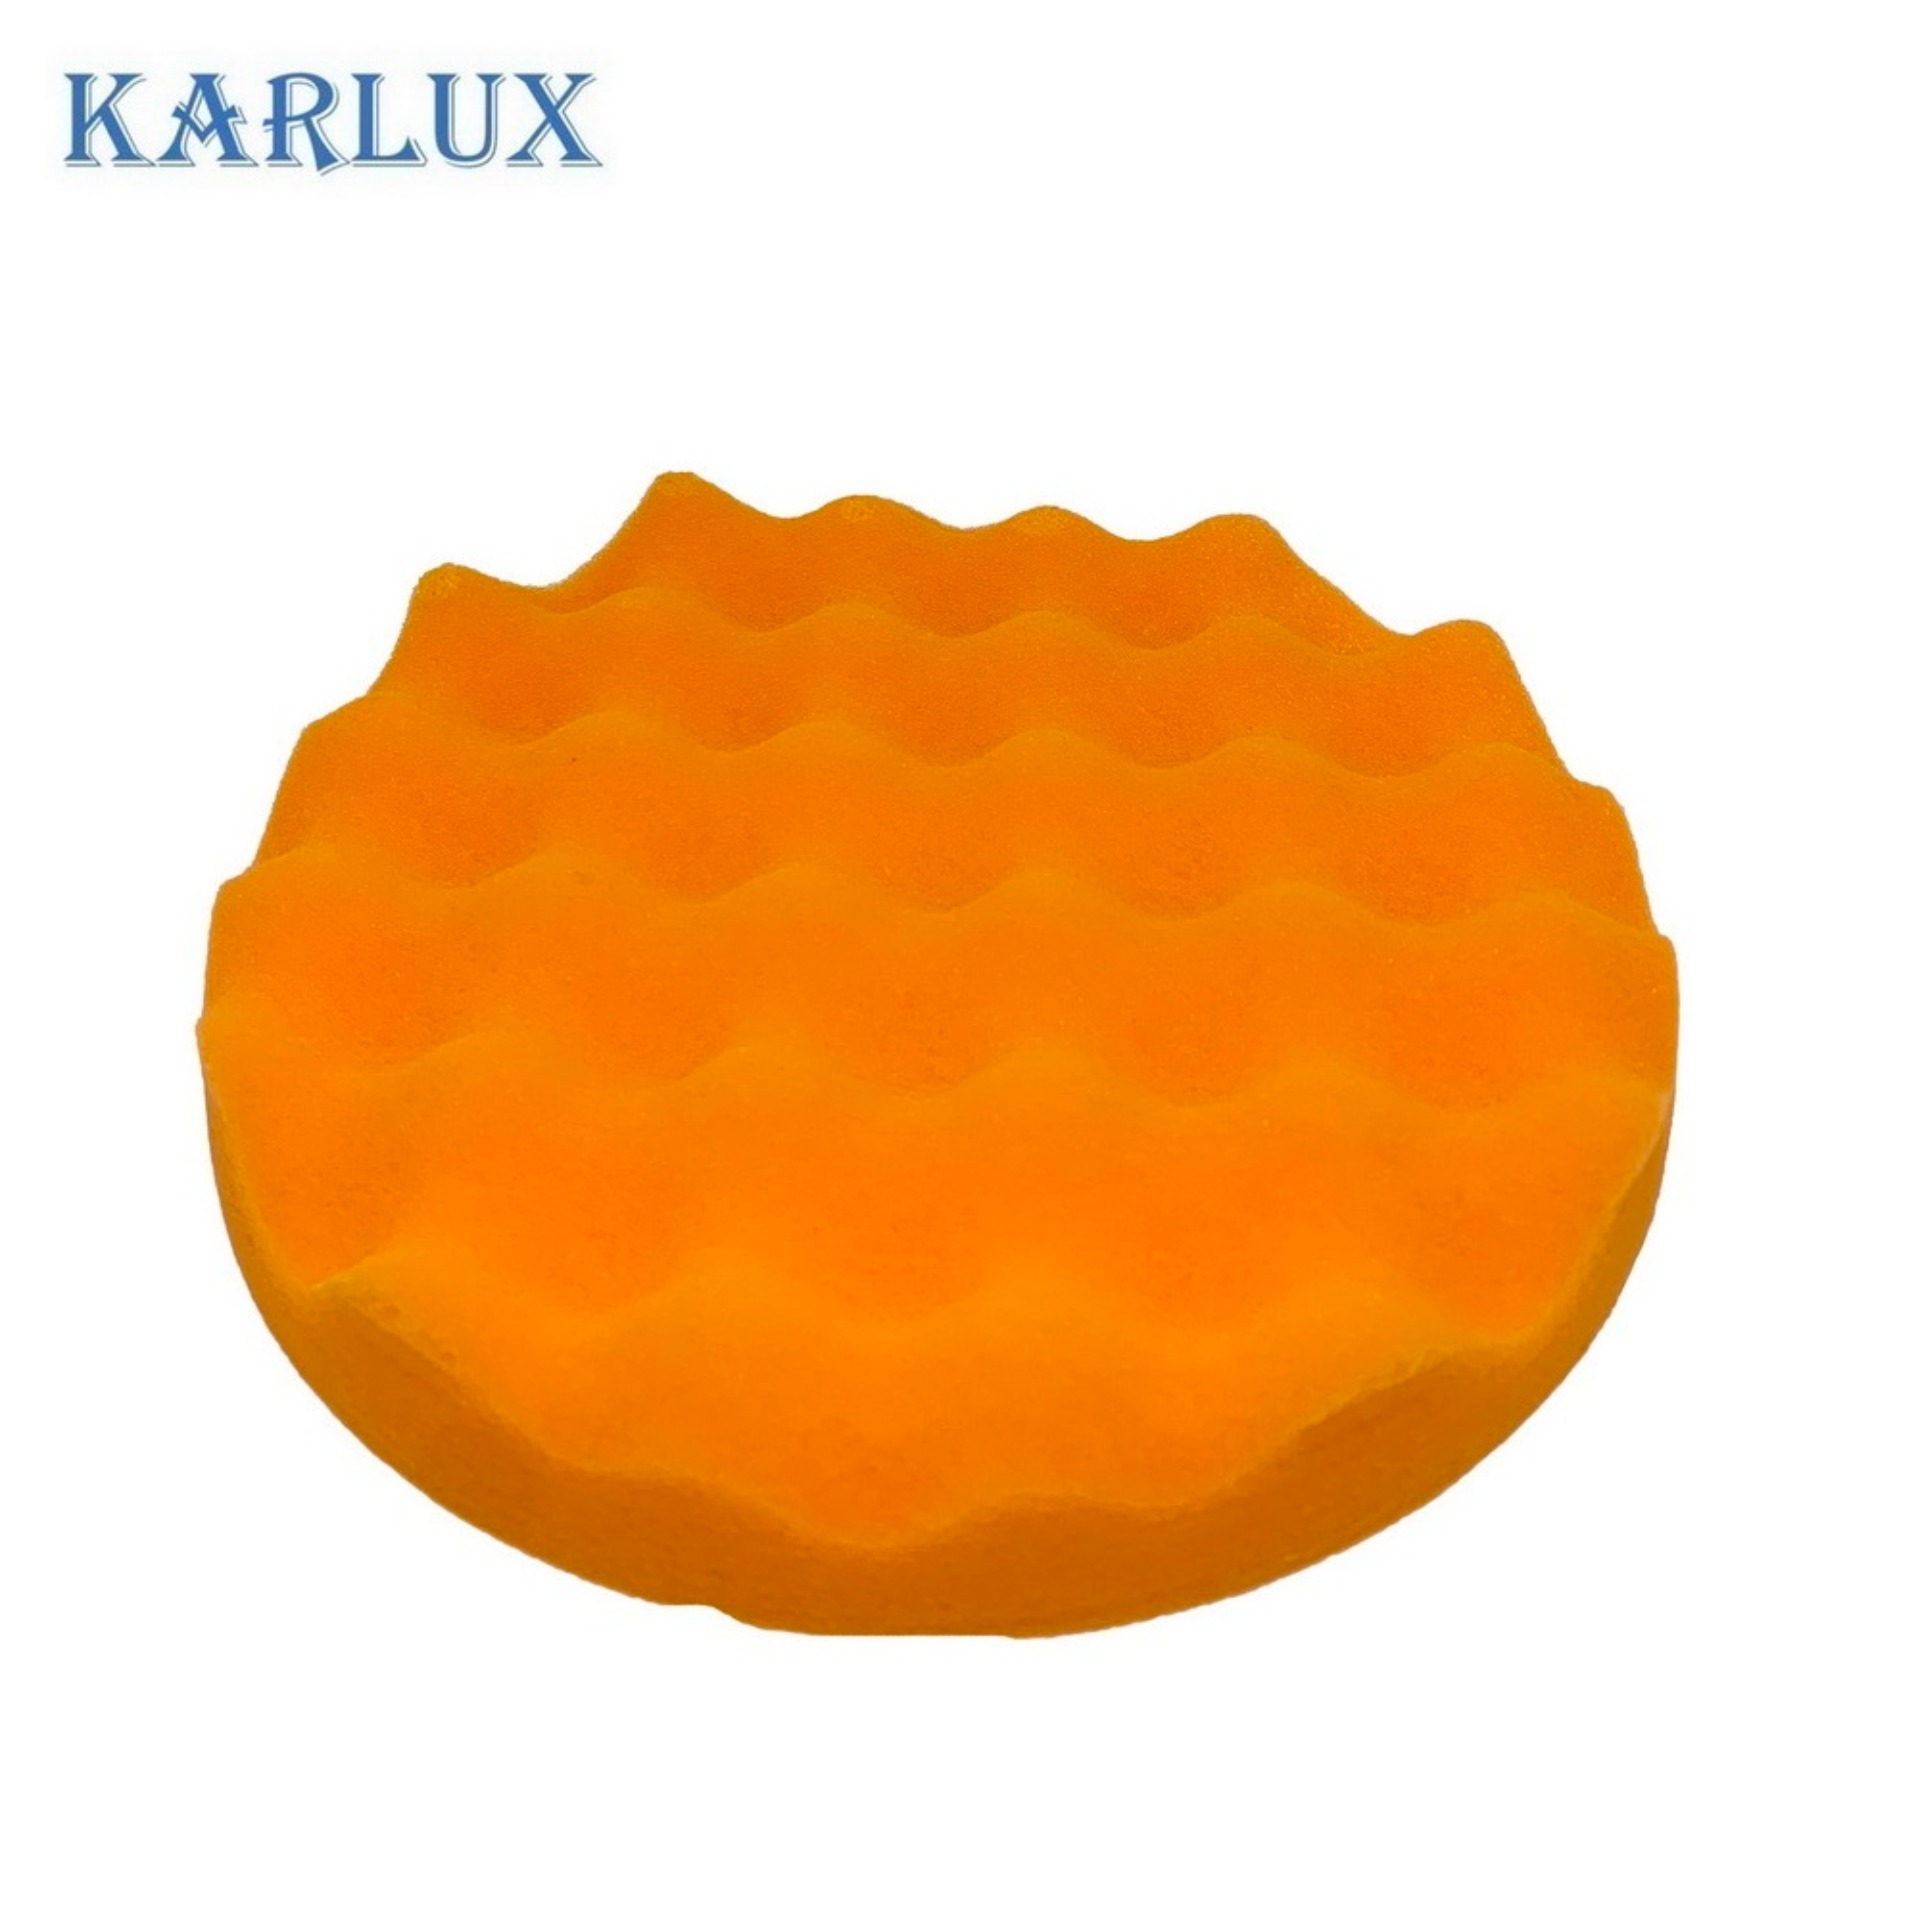 Karlux BUFFING FOAM ฟองน้ำสีส้ม ขัดหยาบ 8นิ้ว แบบรังไข่